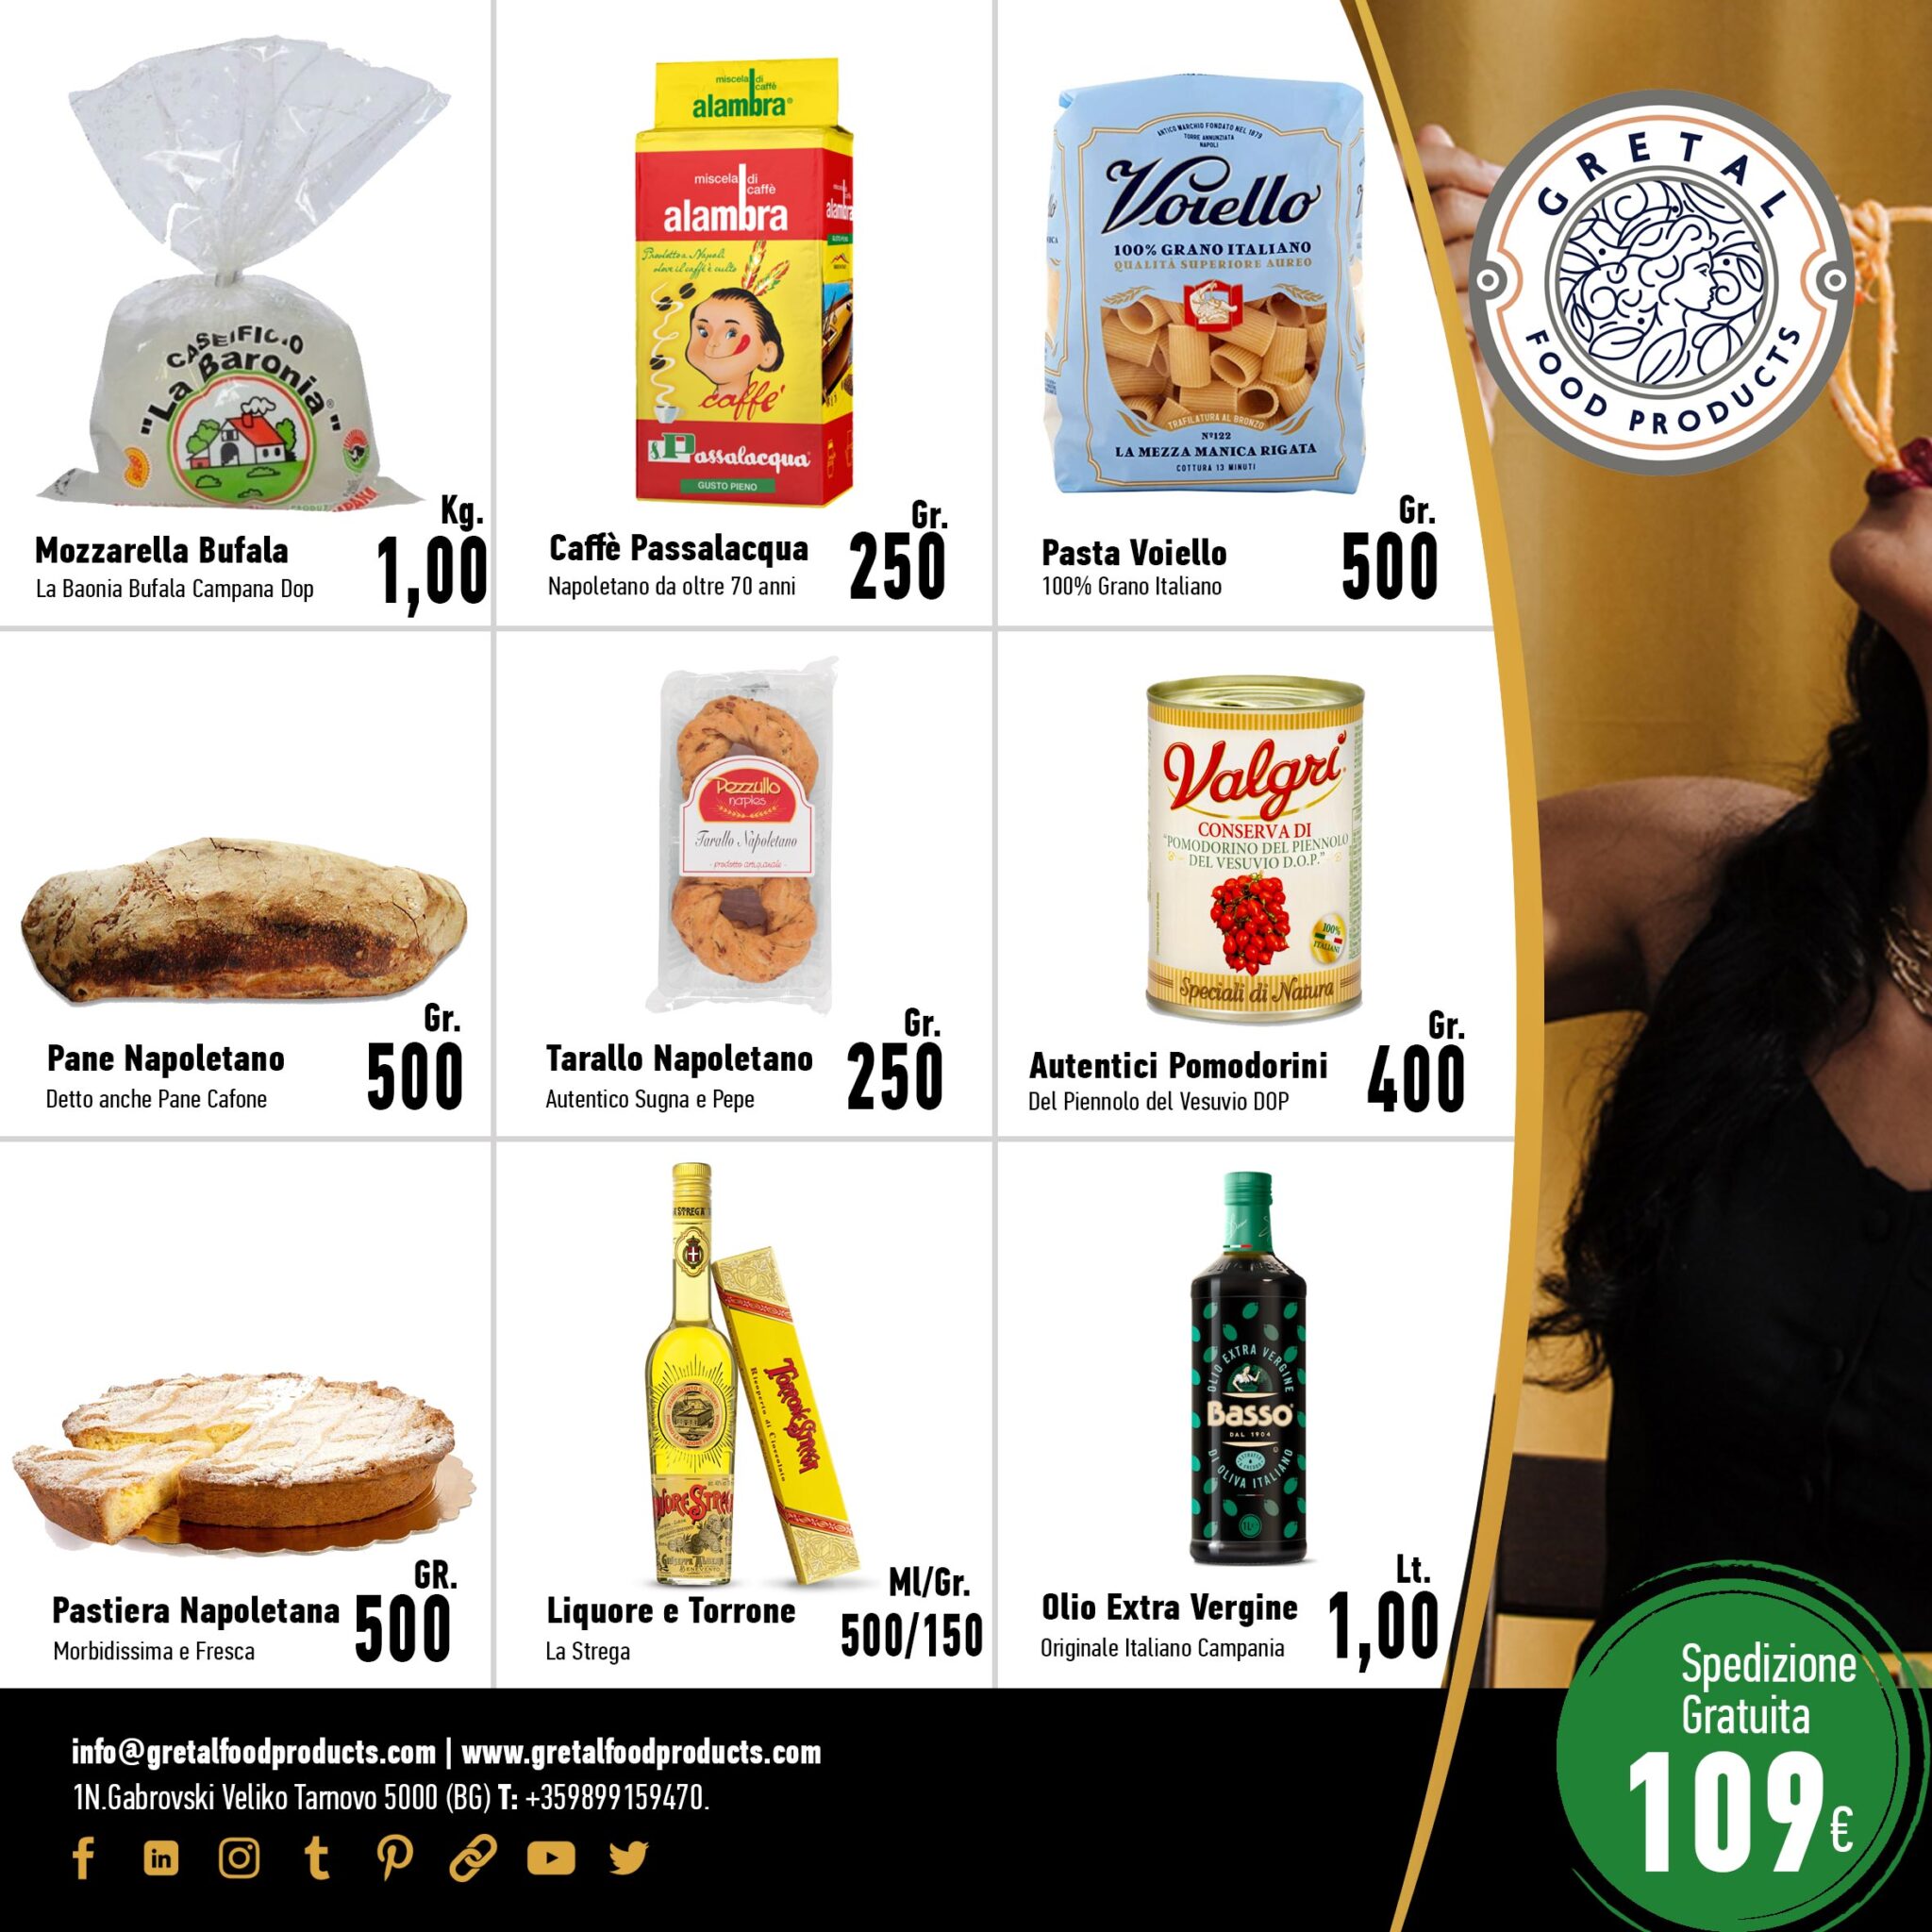 Gift-Baskets-Italian-Gretal-Food-Products-109